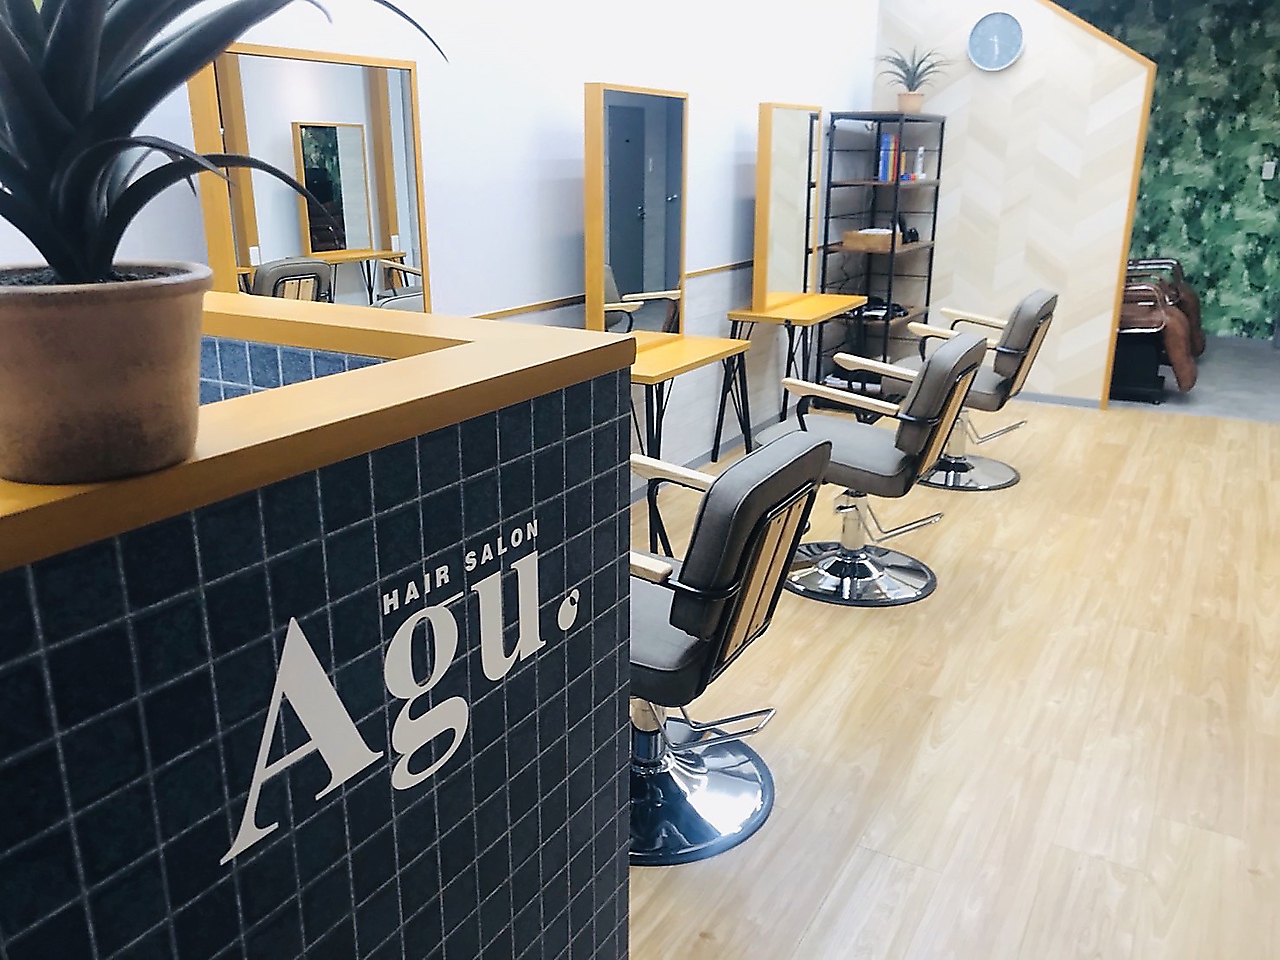 Agu Hair Azurイーストモール店 Agu Hair Salon アグ ヘアサロン 美容室